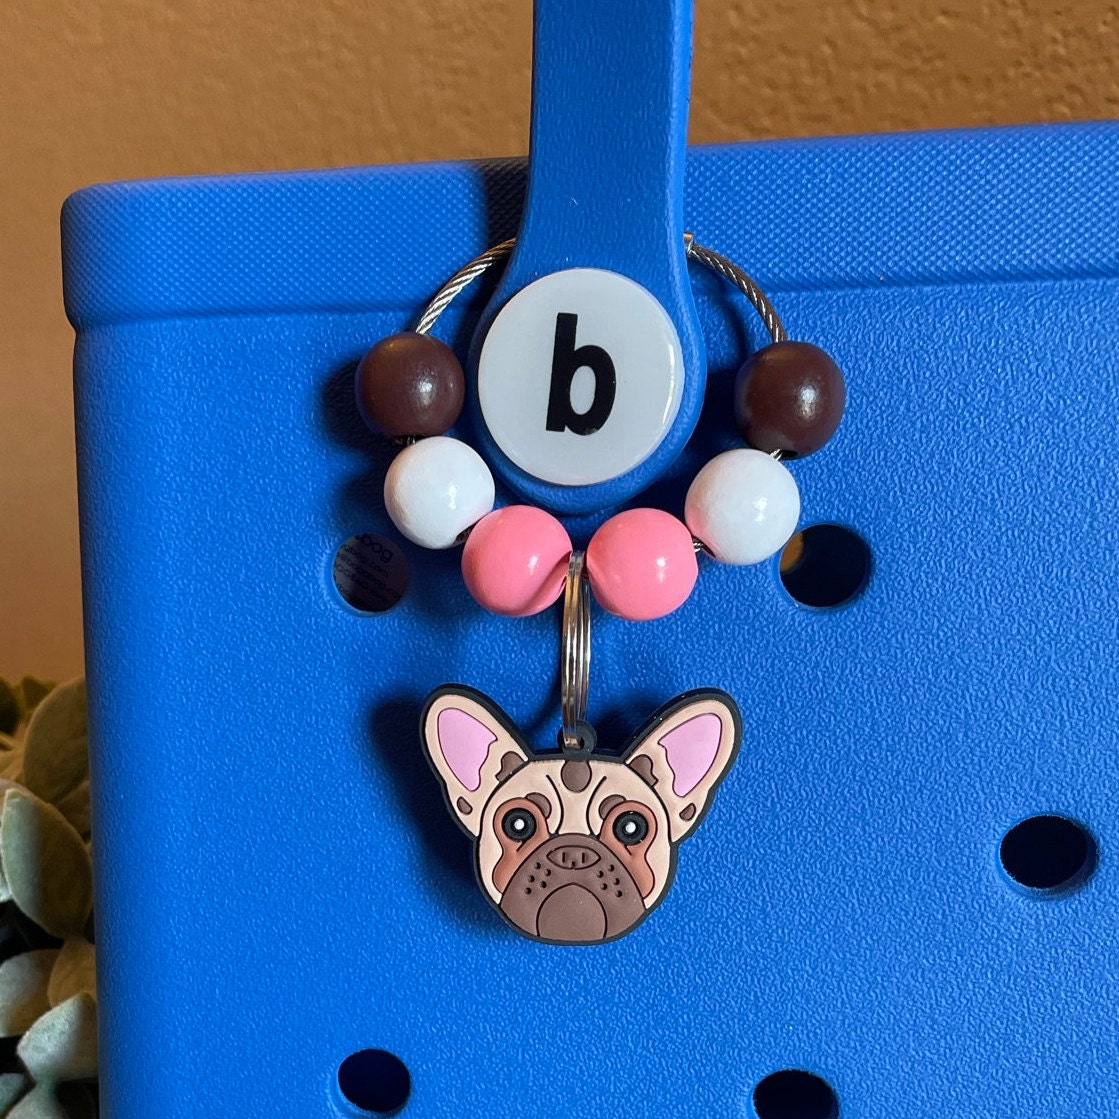 KAHRI Mini French Bulldog Bag Charm